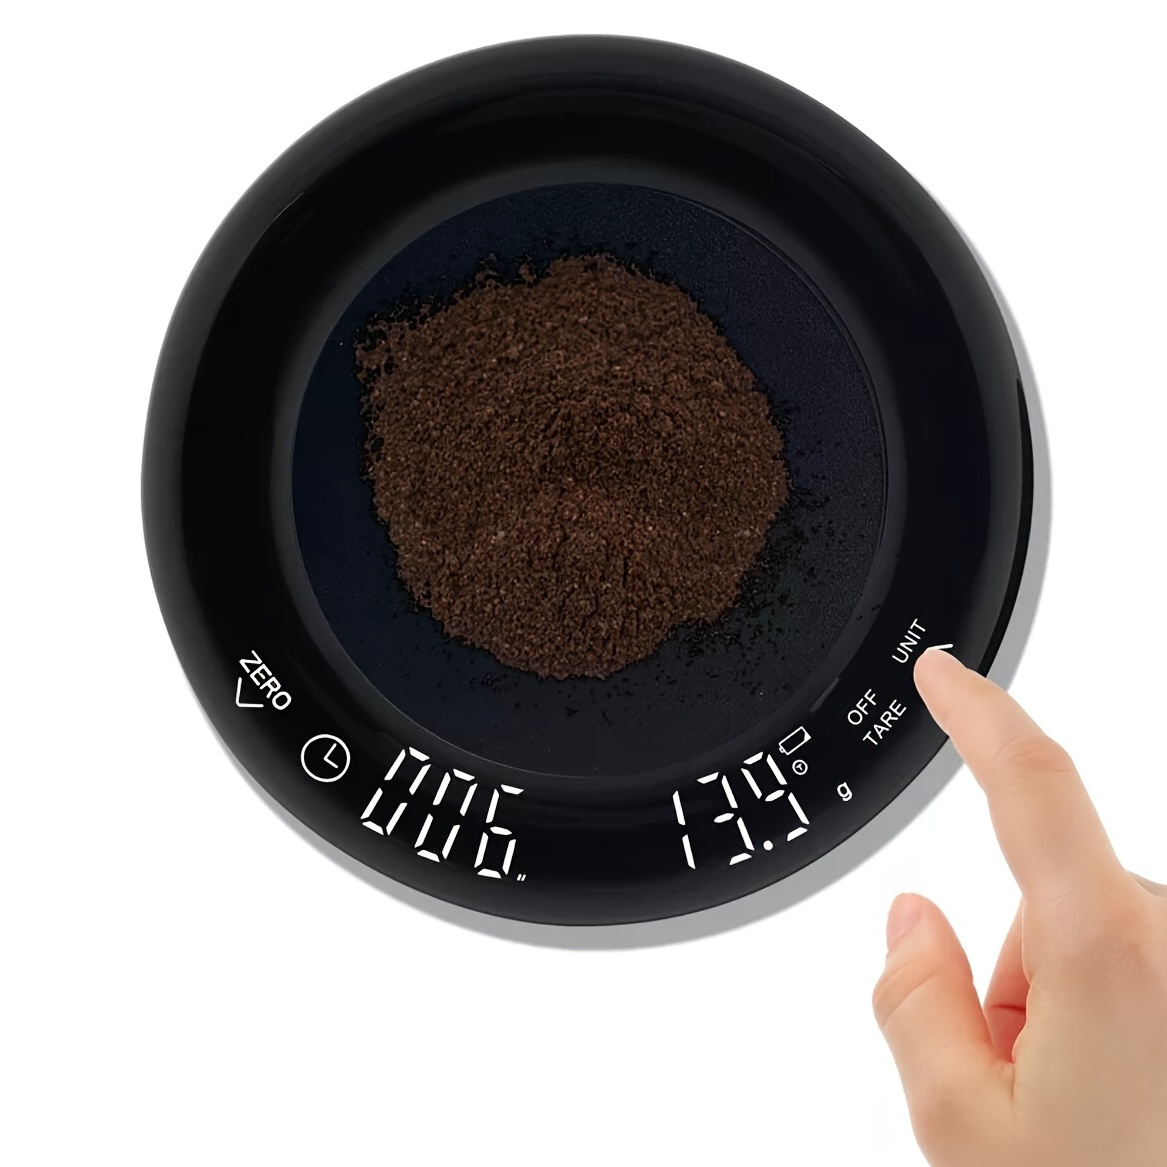 EDO Espresso coffee timer scales